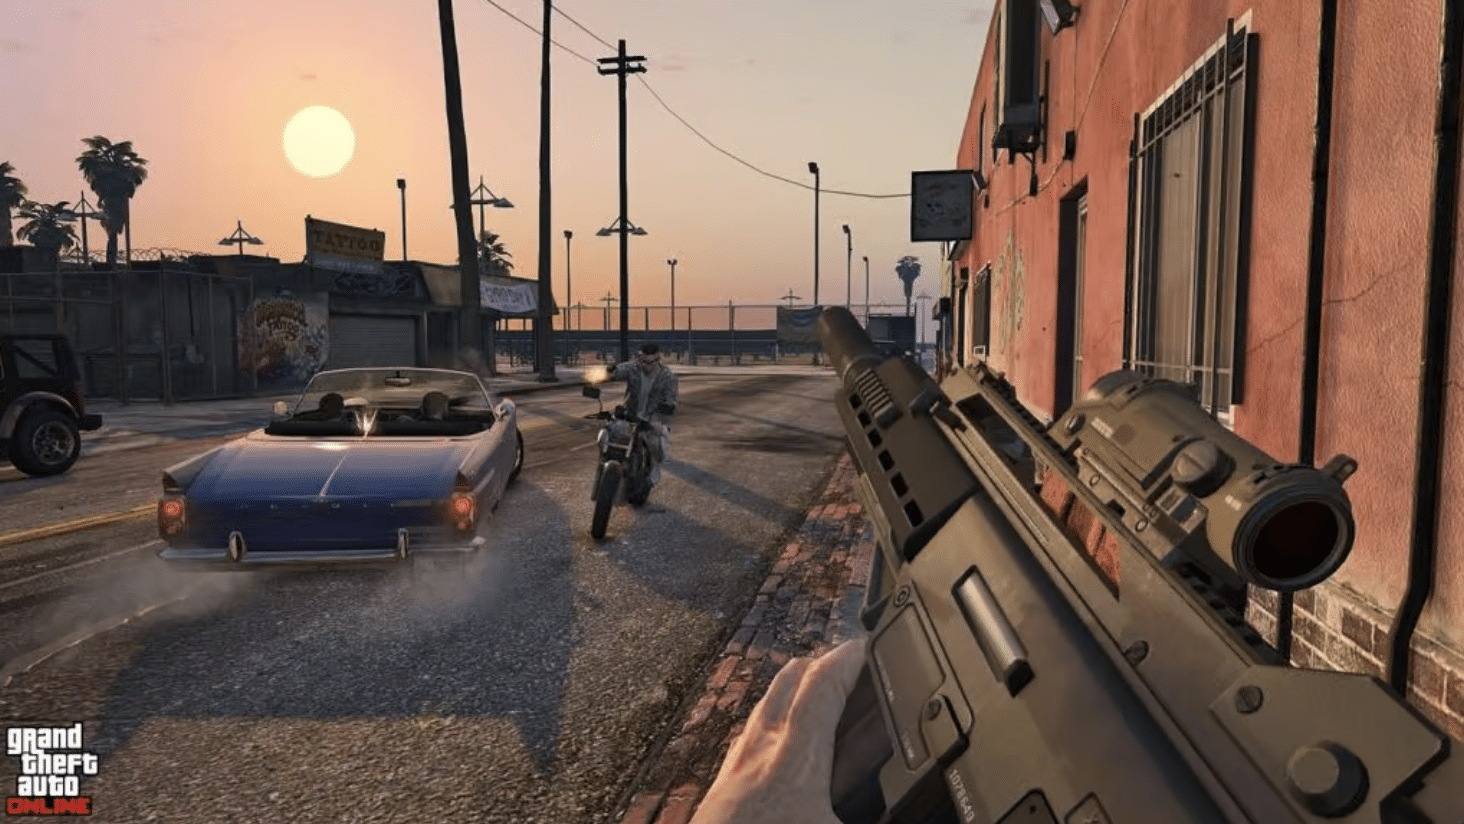 Latest GTA 6 leaks suggest Rockstar Games focusing on a first